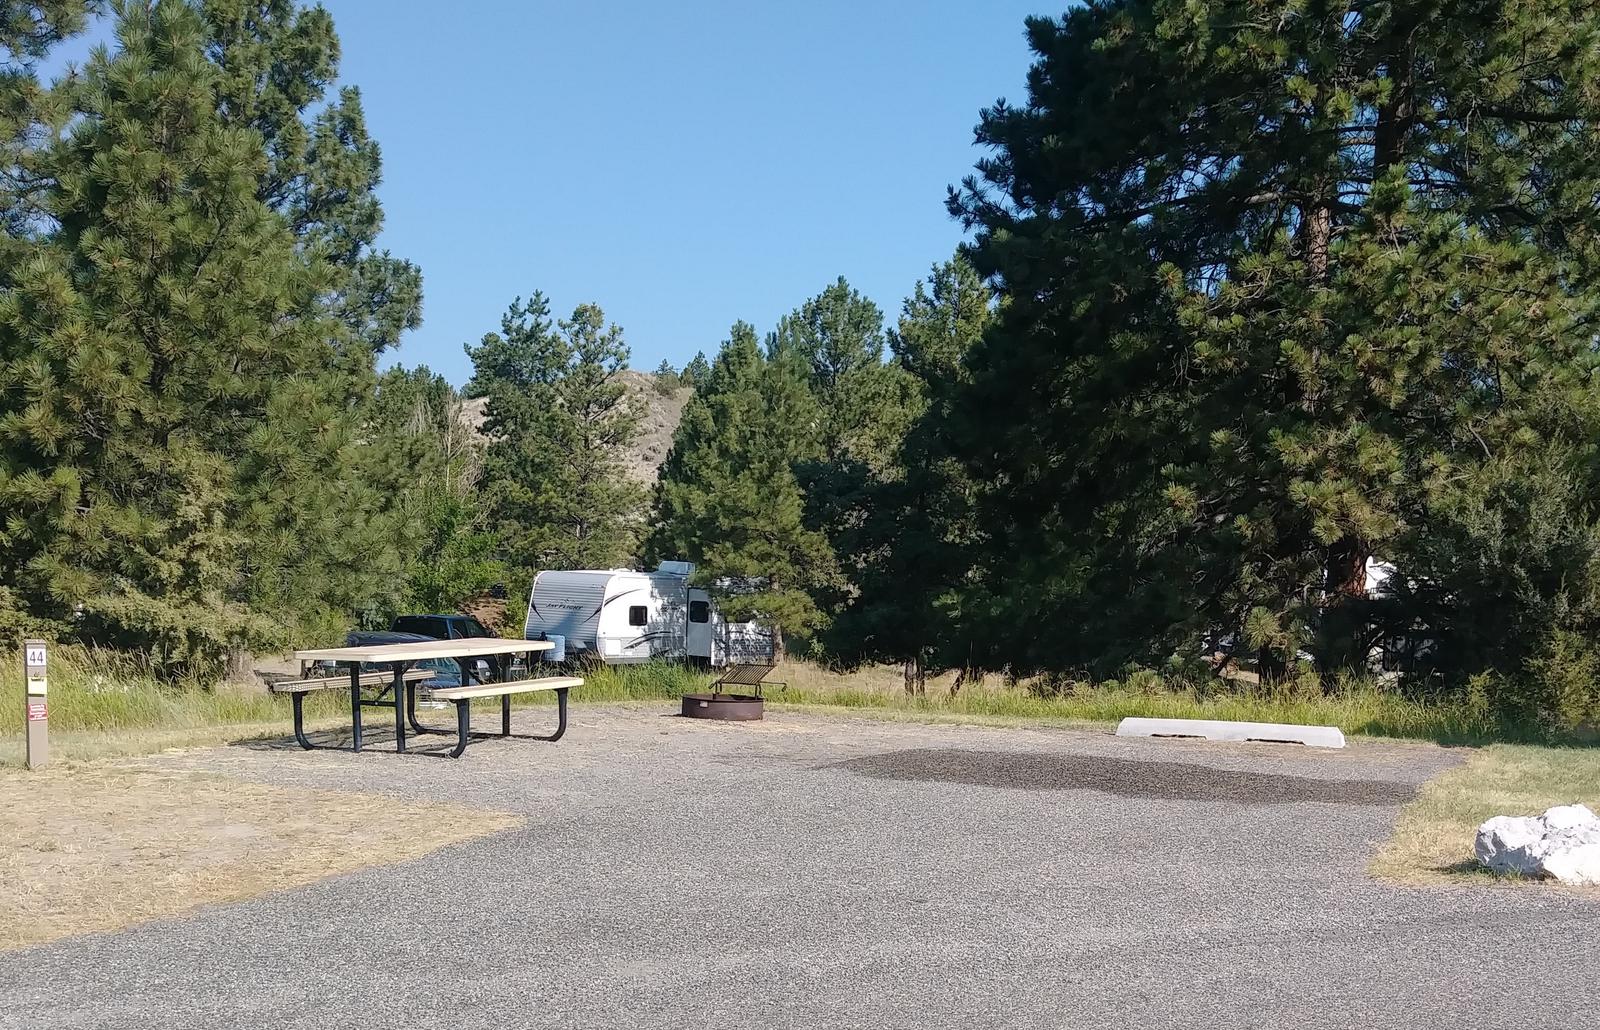 Court Sheriff Campground - Campsite 44